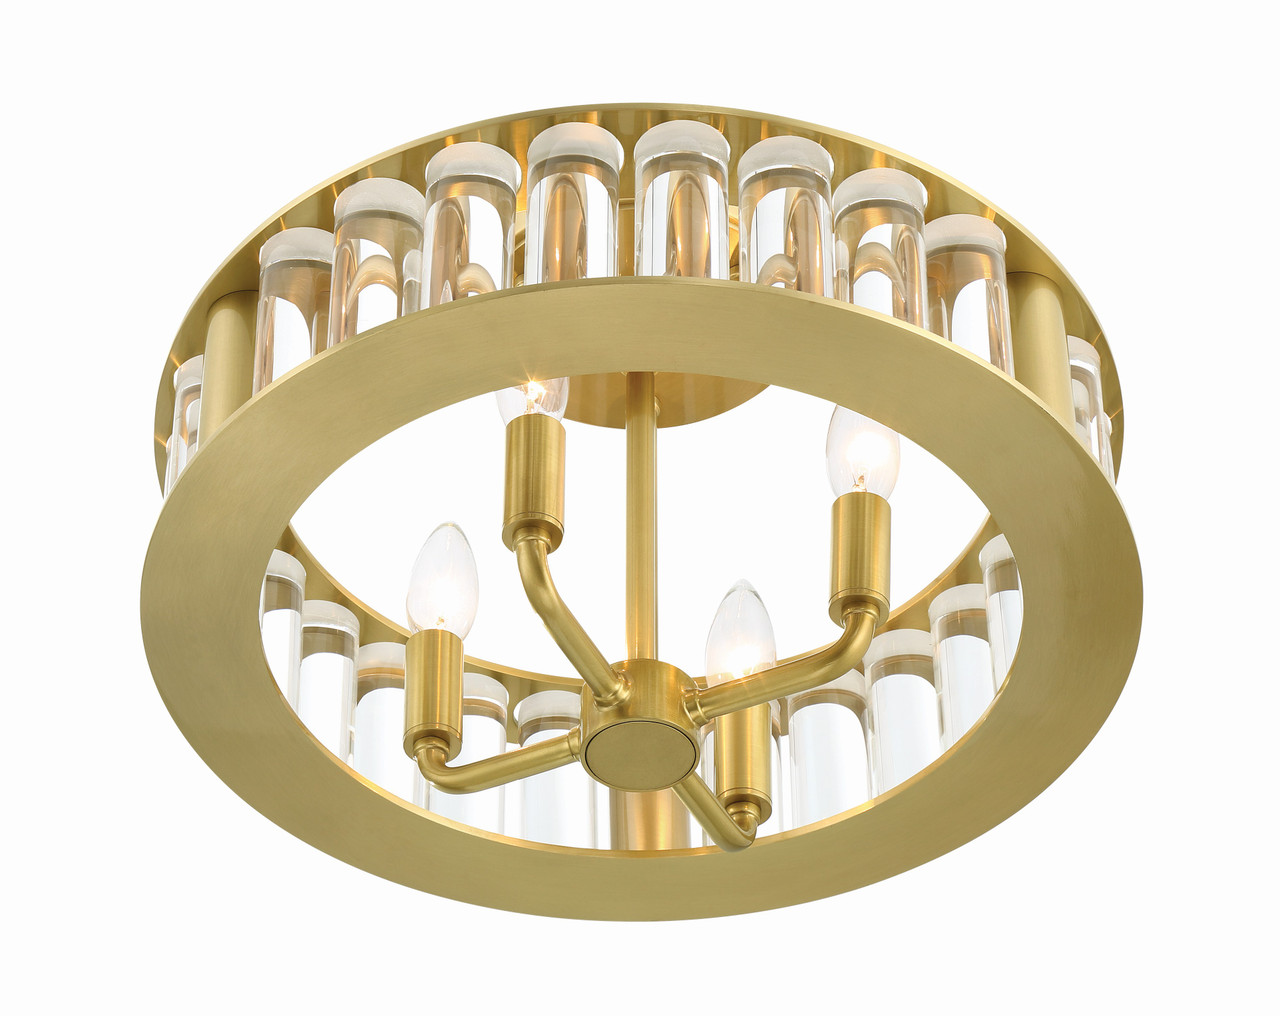 CRYSTORAMA FAR-6000-AG Libby Langdon for Crystorama Farris 4 Light Aged Brass Ceiling Mount